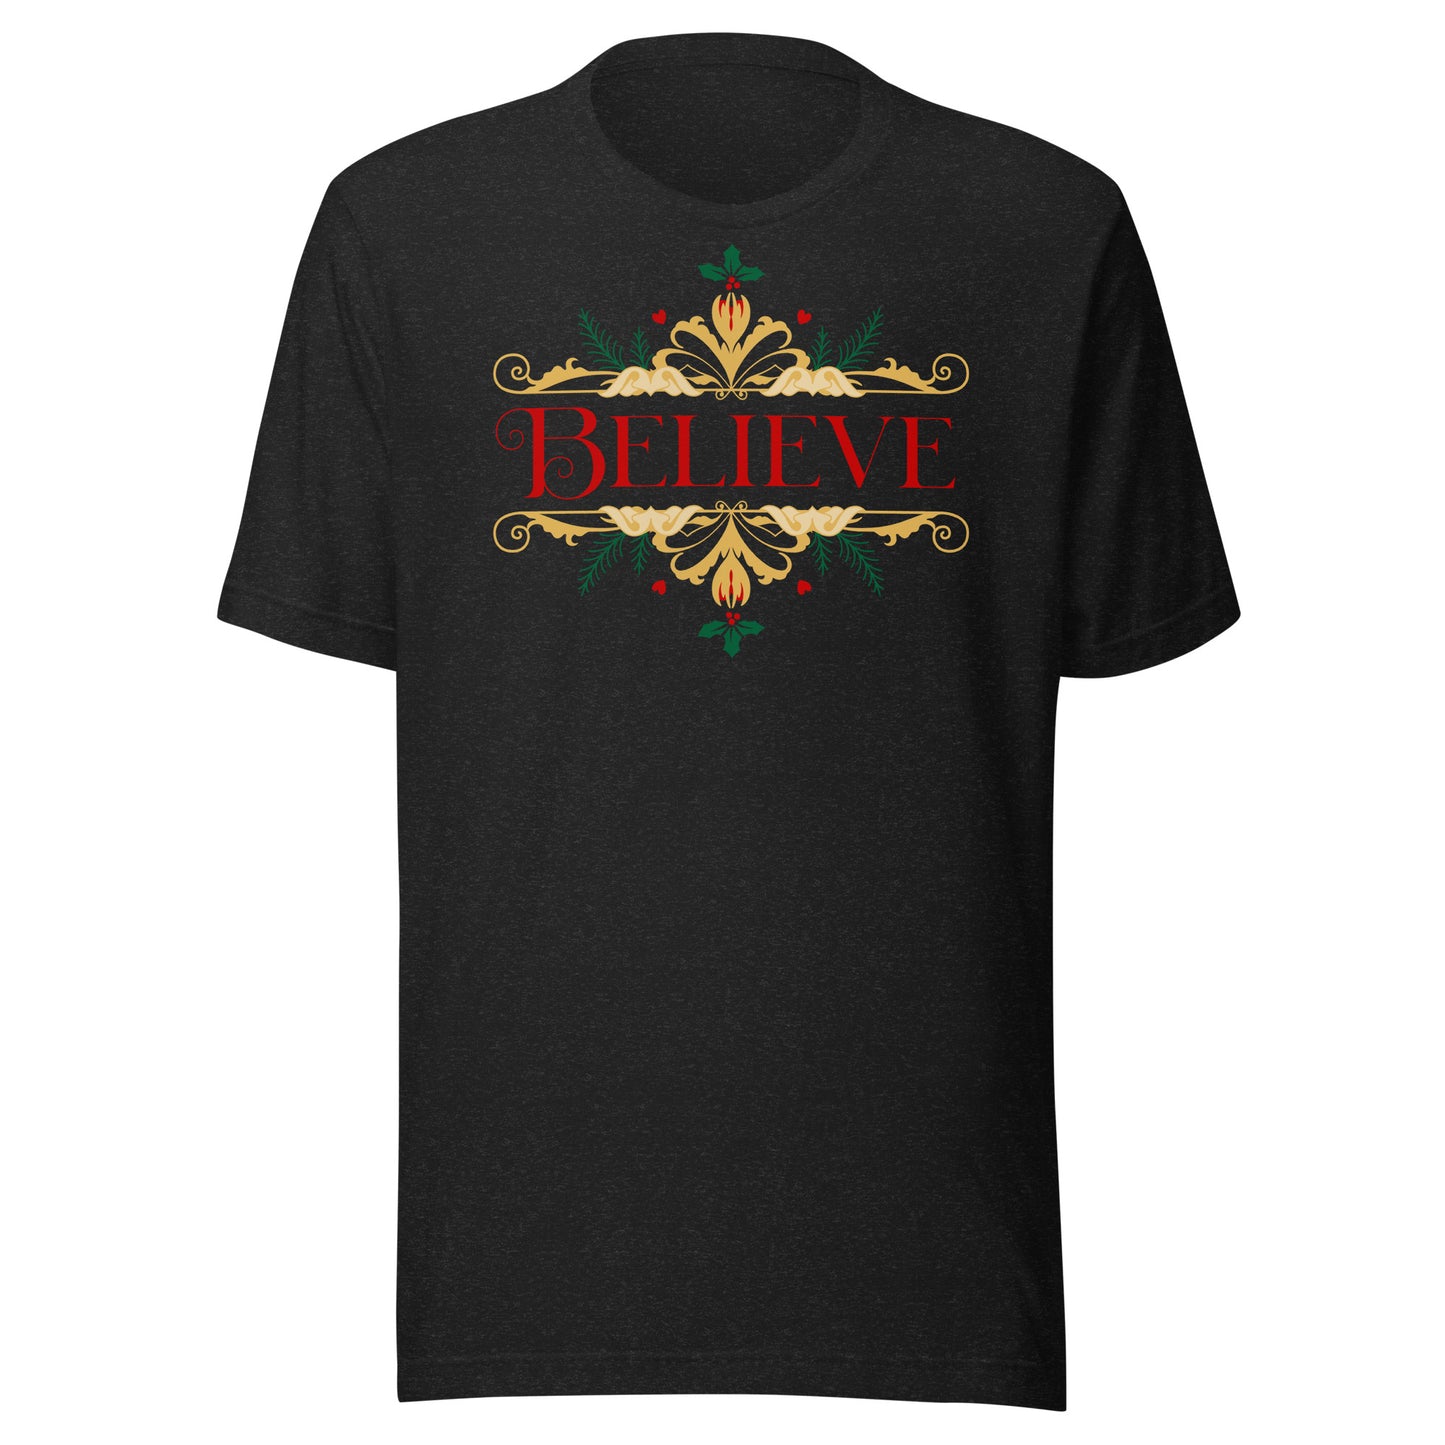 Believe Christmas t-shirt